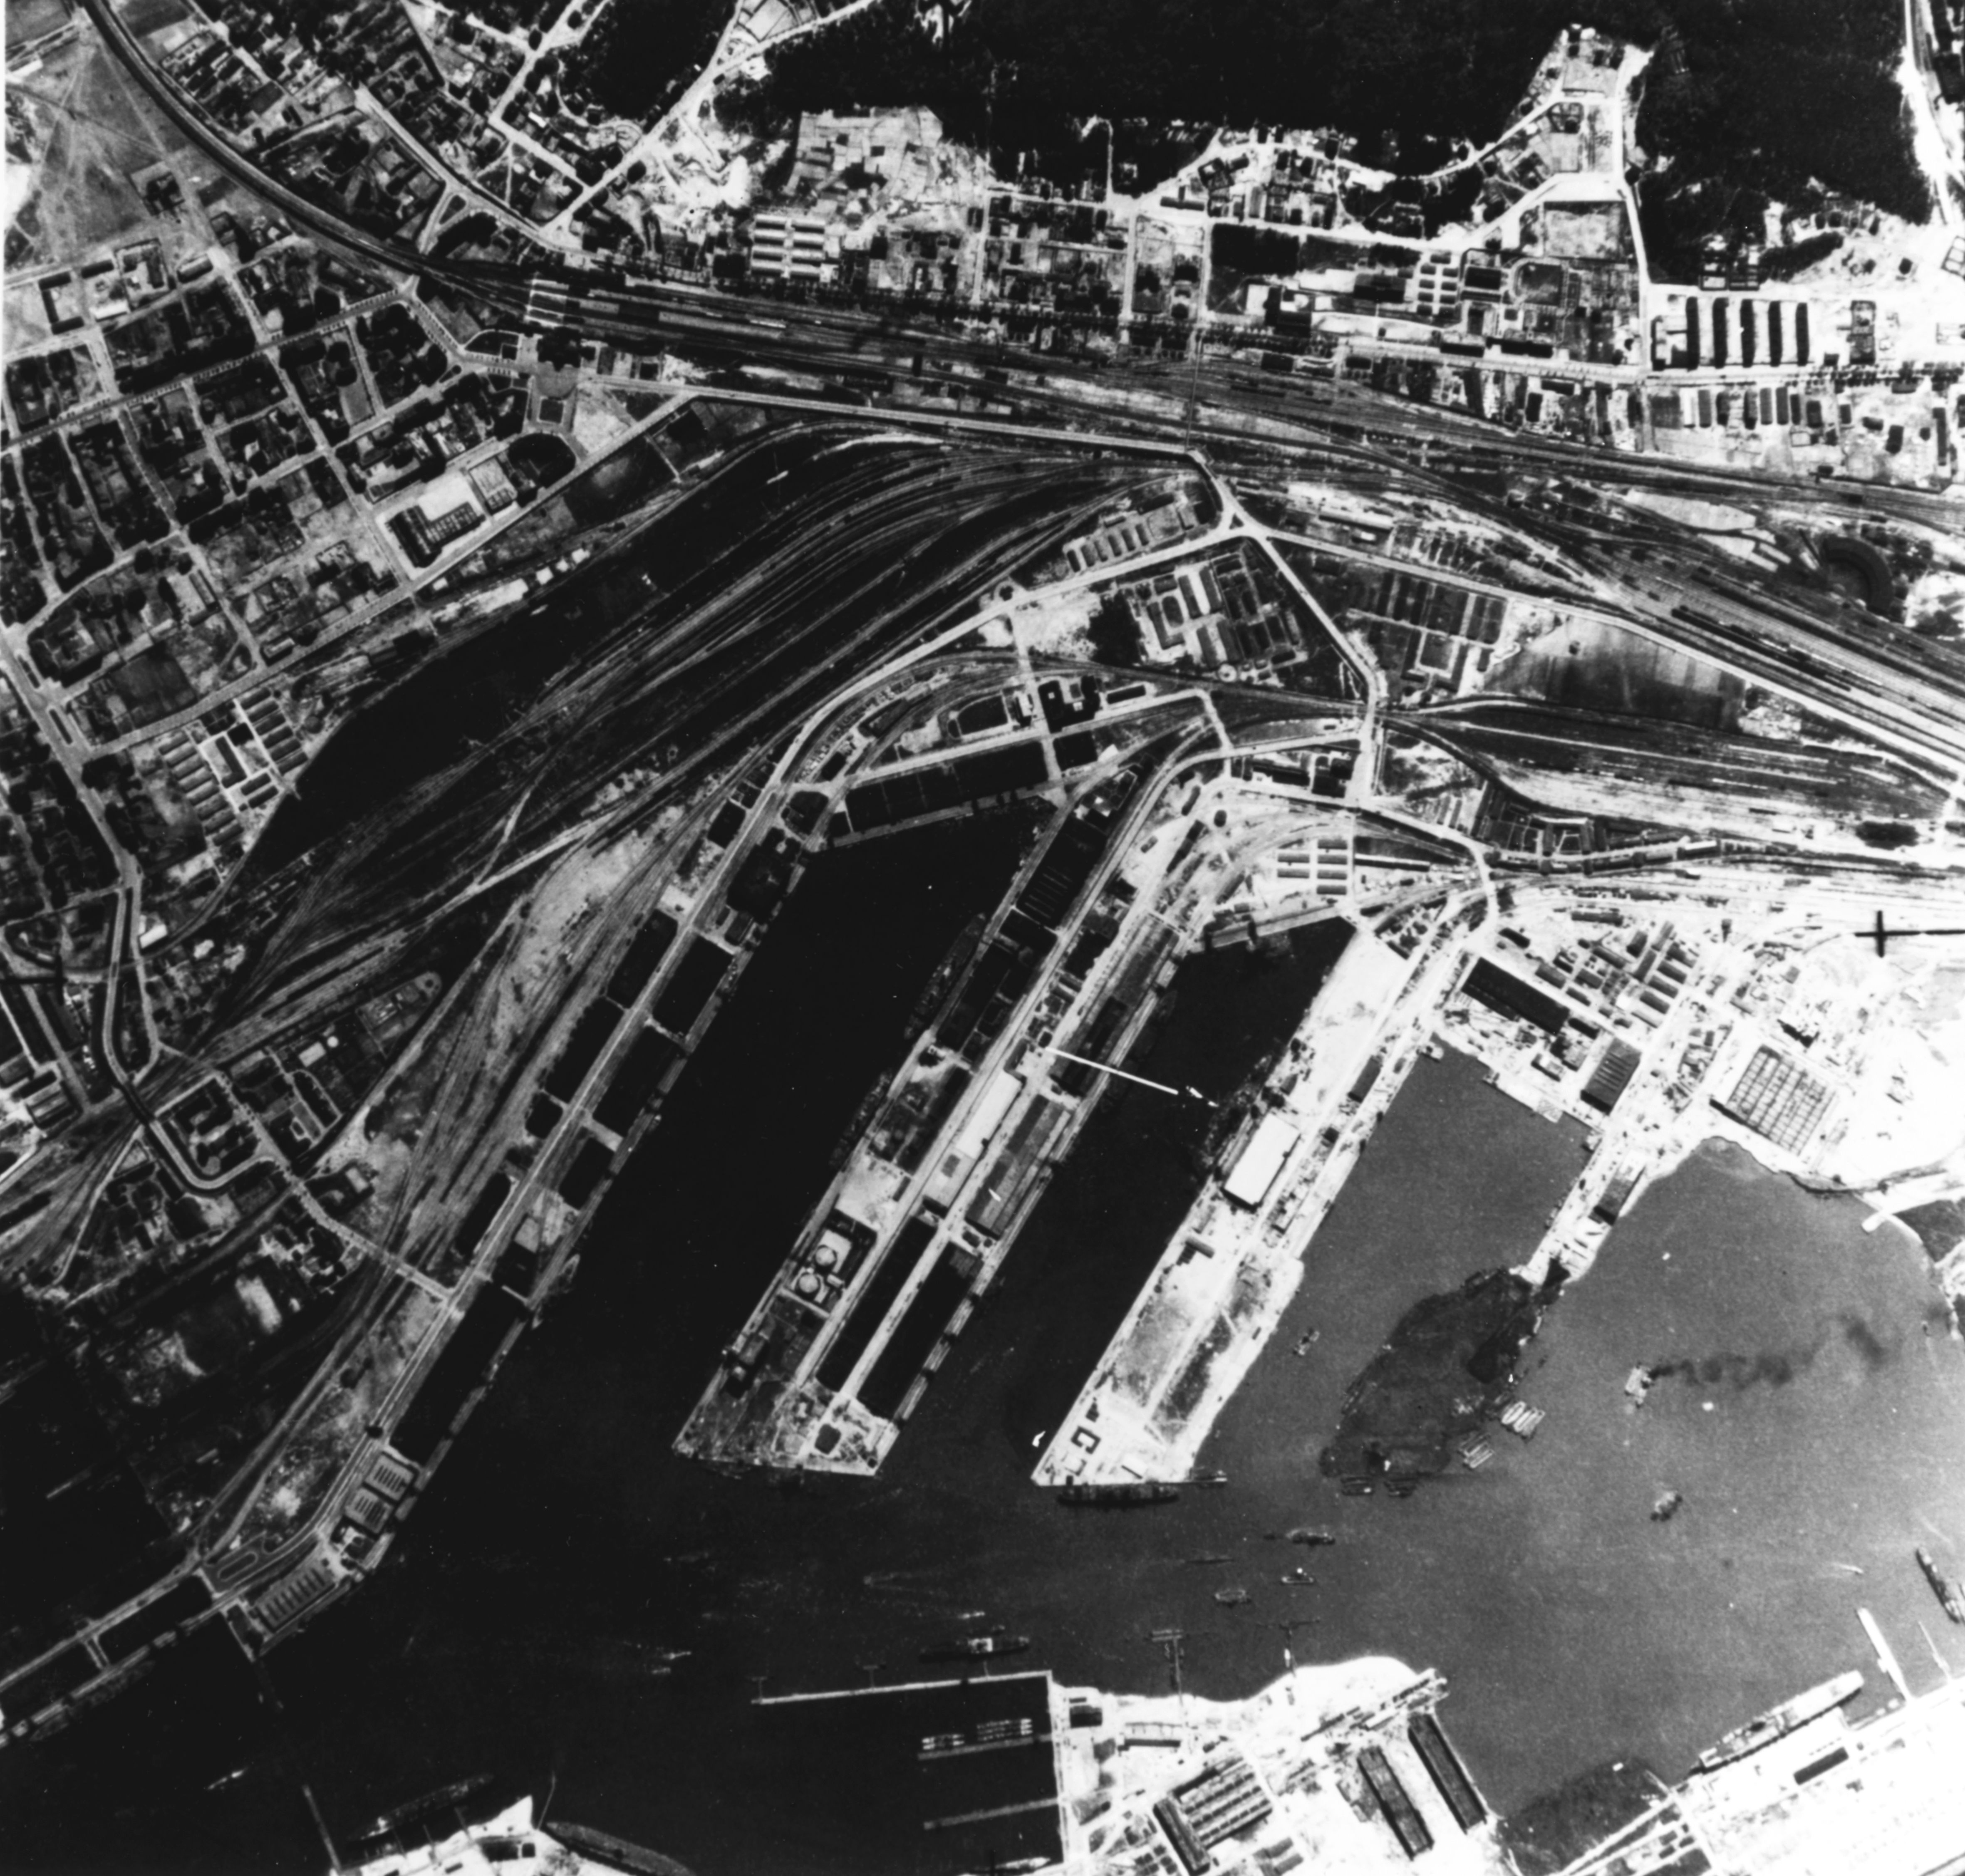 Aerial view of Gotenhafen (Gdynia), occupied Poland, Jun 1942, photo 1 of 2; photo taken by a British RAF aircraft; note battlecruiser Gneisenau (white arrow) and carrier Graf Zeppelin (bottom)